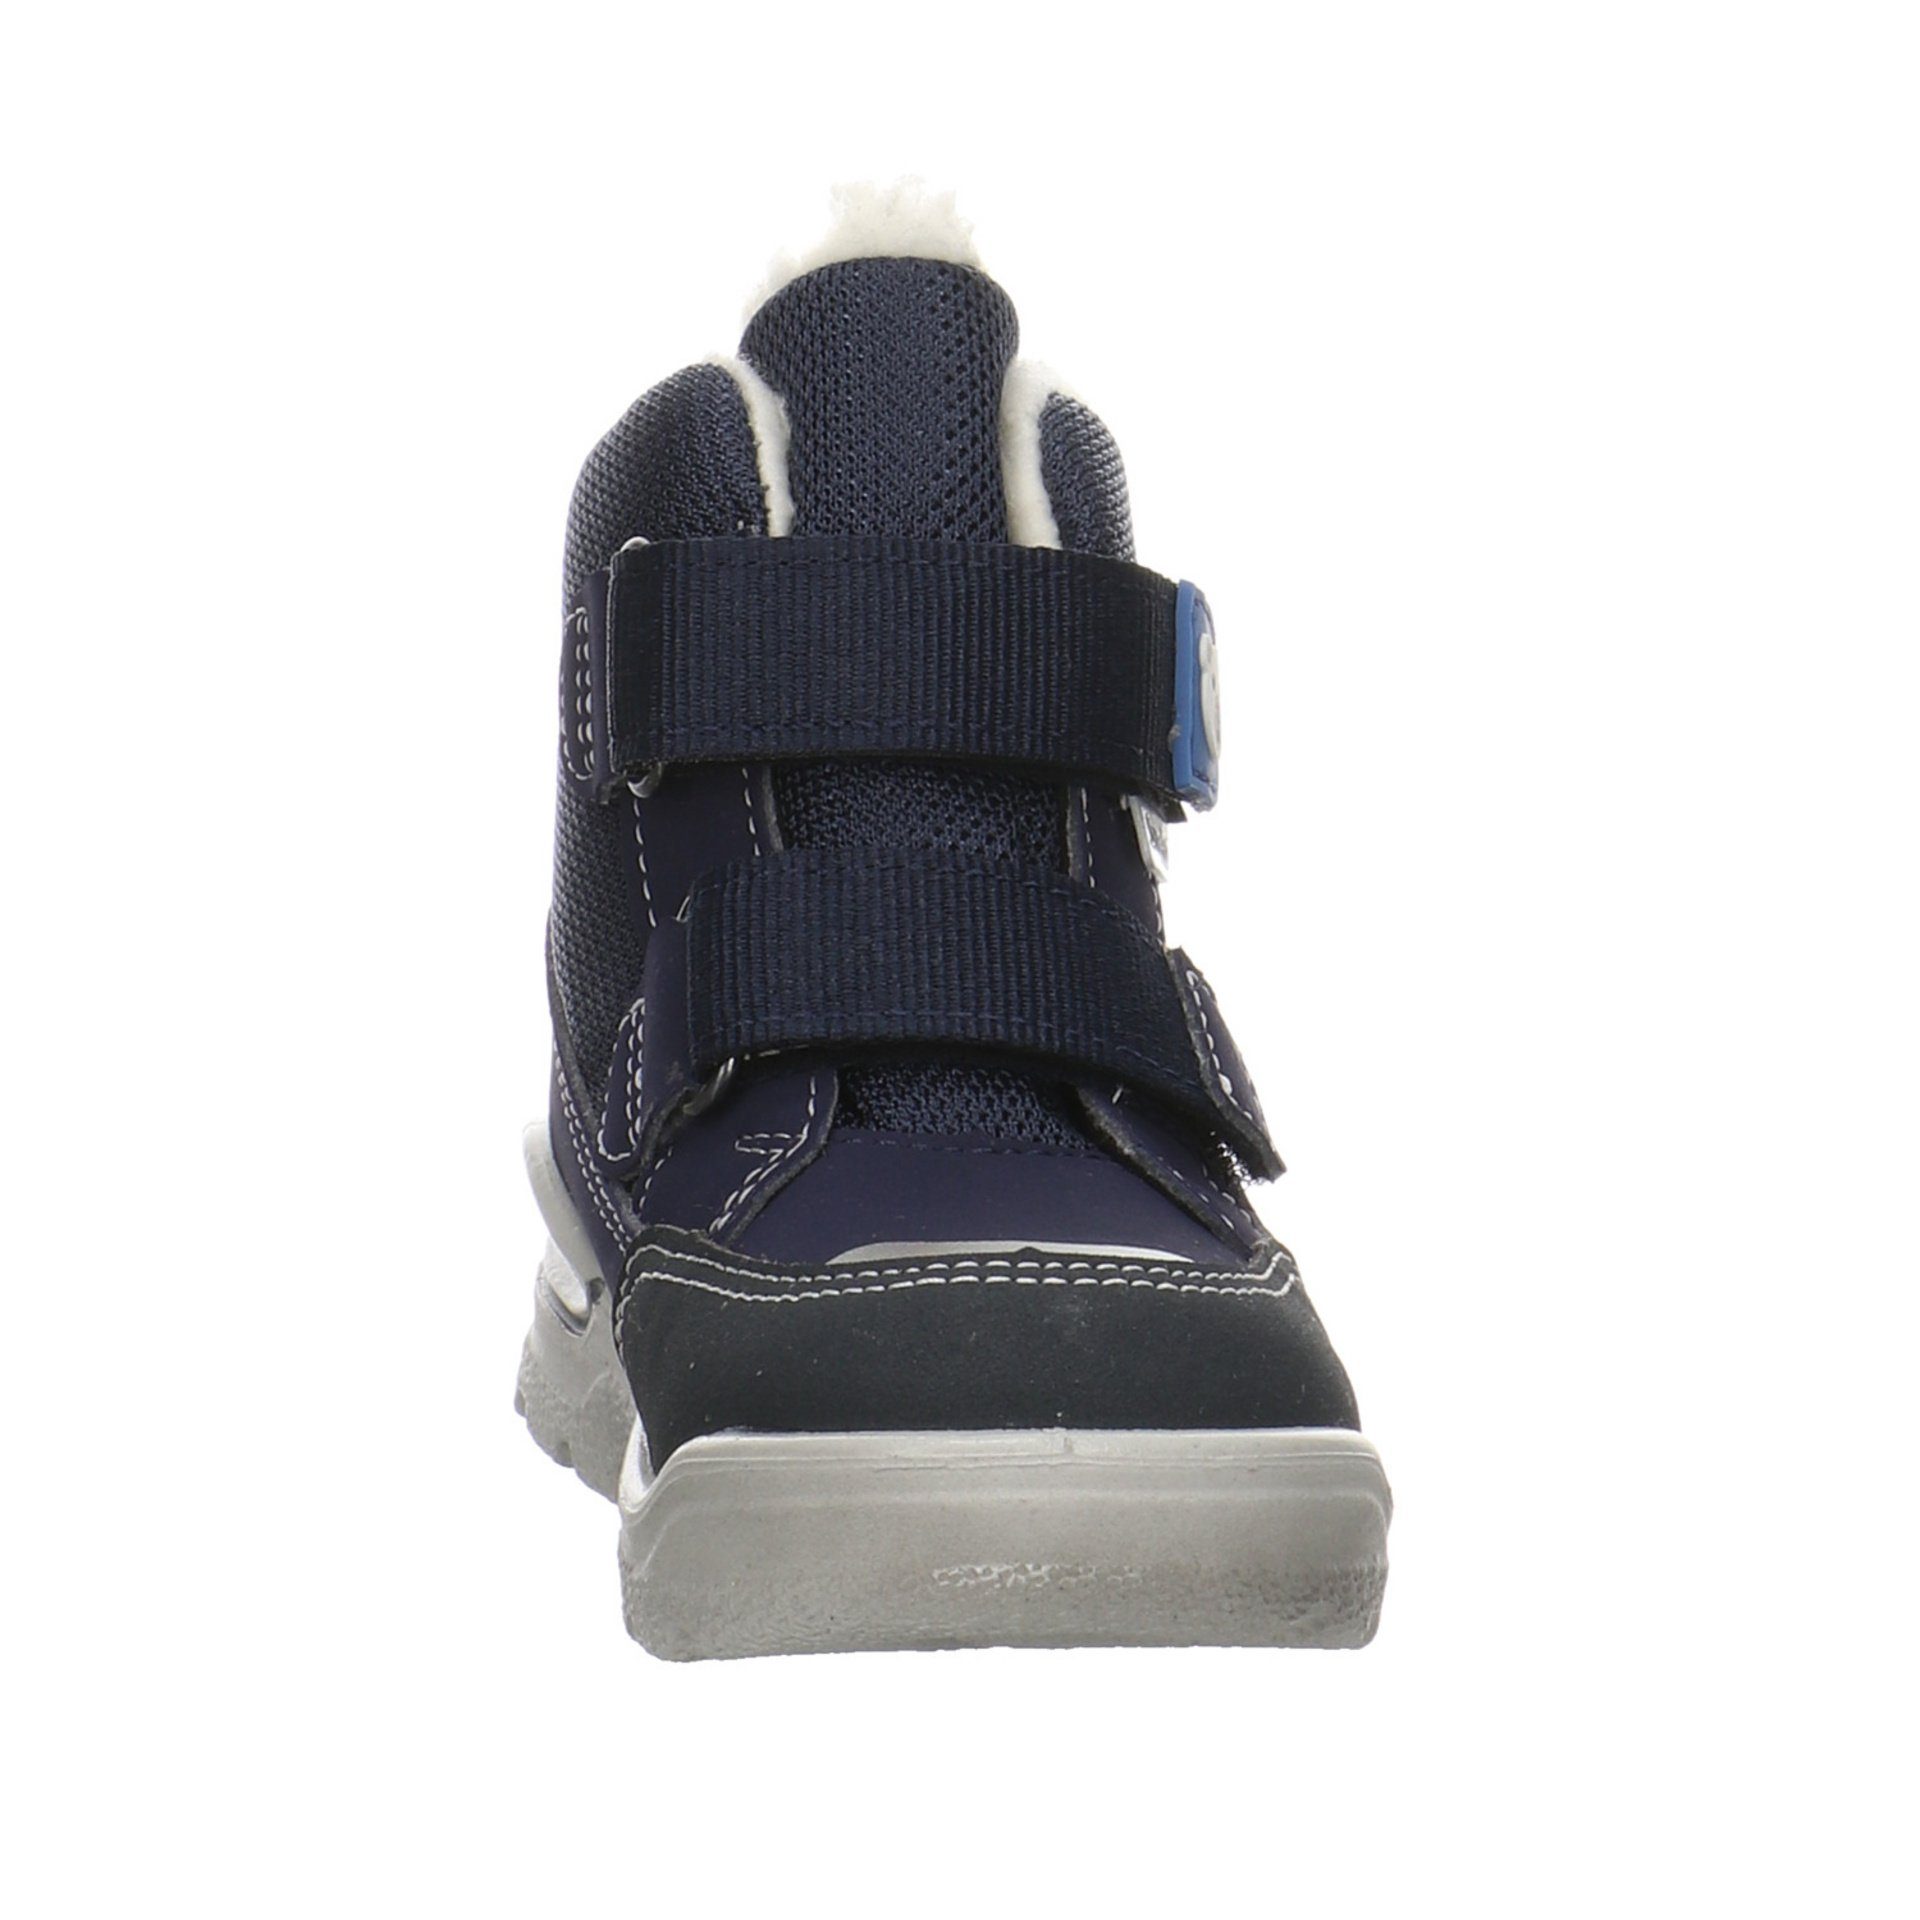 Jungen Synthetikkombination (170) nautic/ozean Kinderschuhe Schuhe Benno Sneaker Sneaker Ricosta Boots